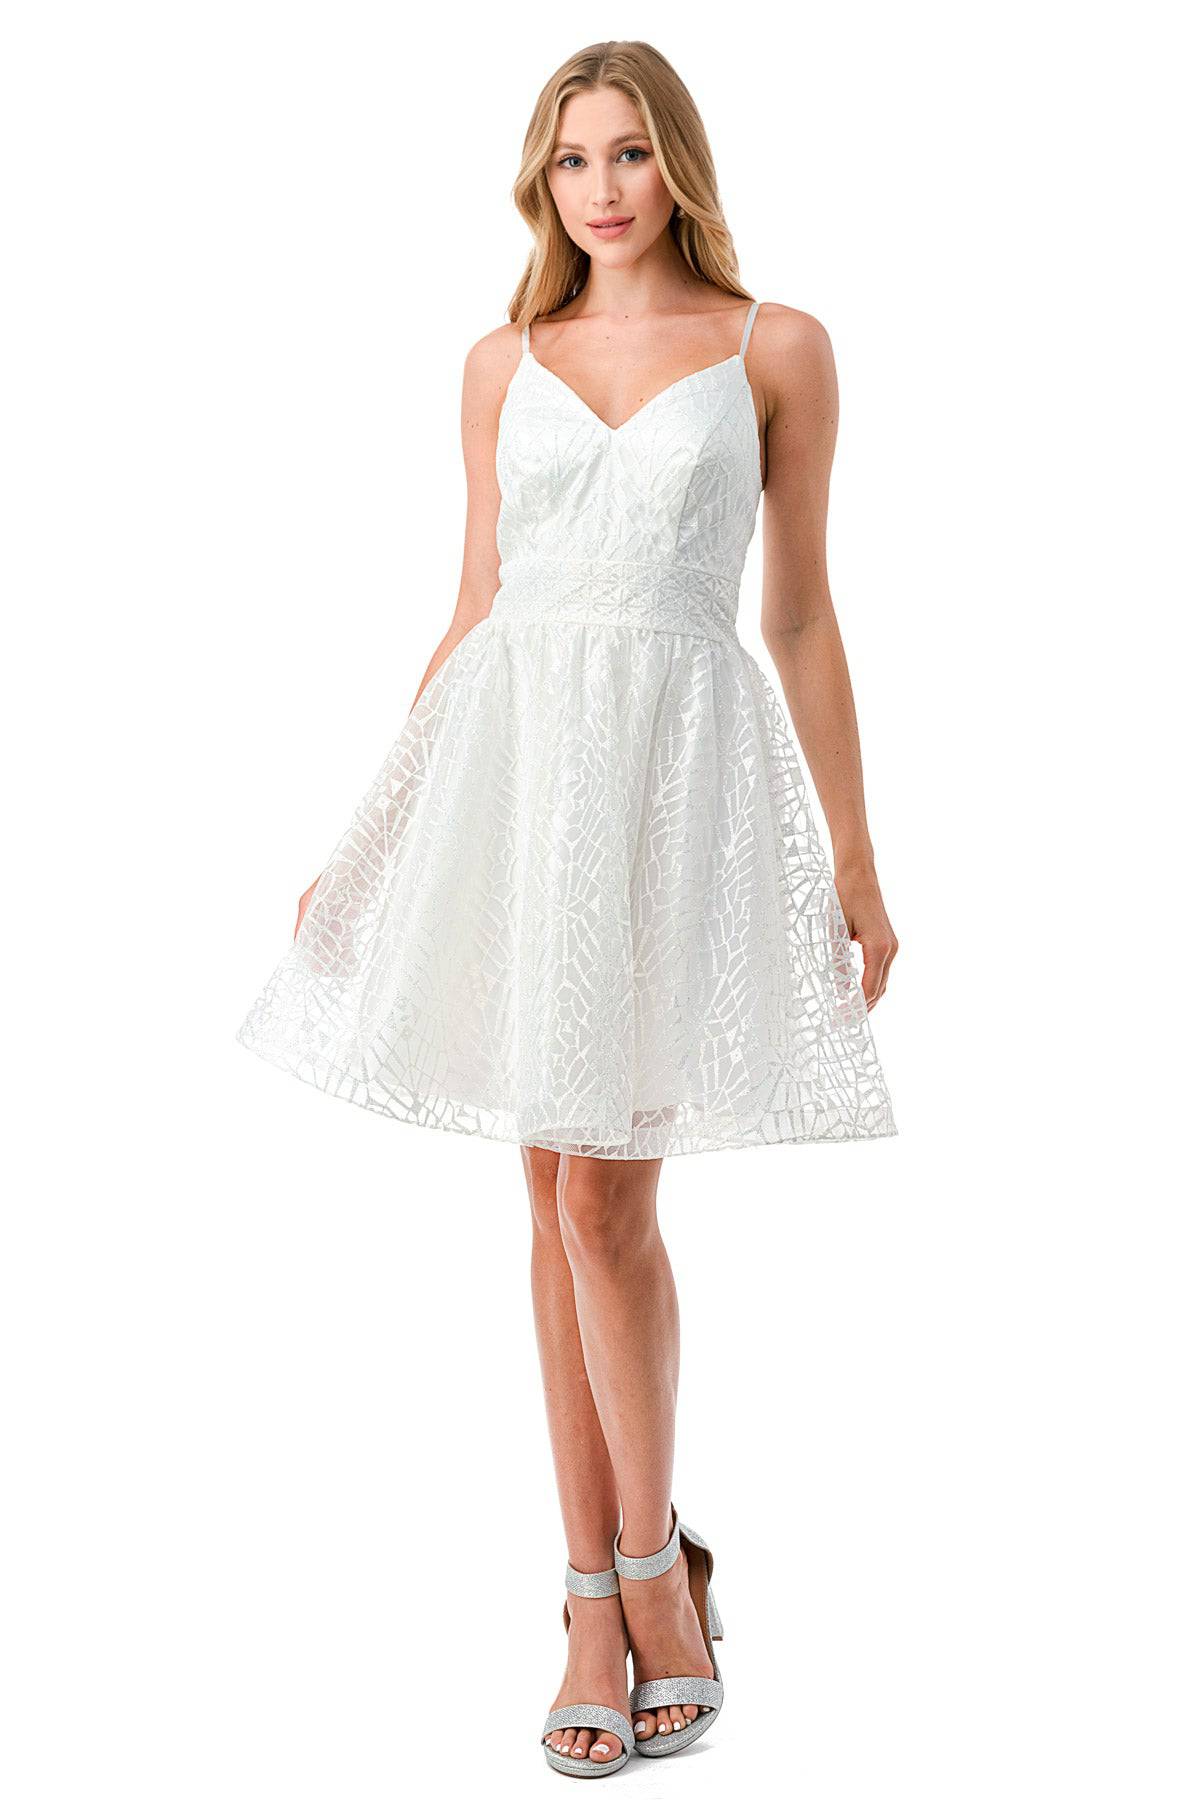 Aspeed S2749B Shimmering White V Neck Short Dress - NORMA REED